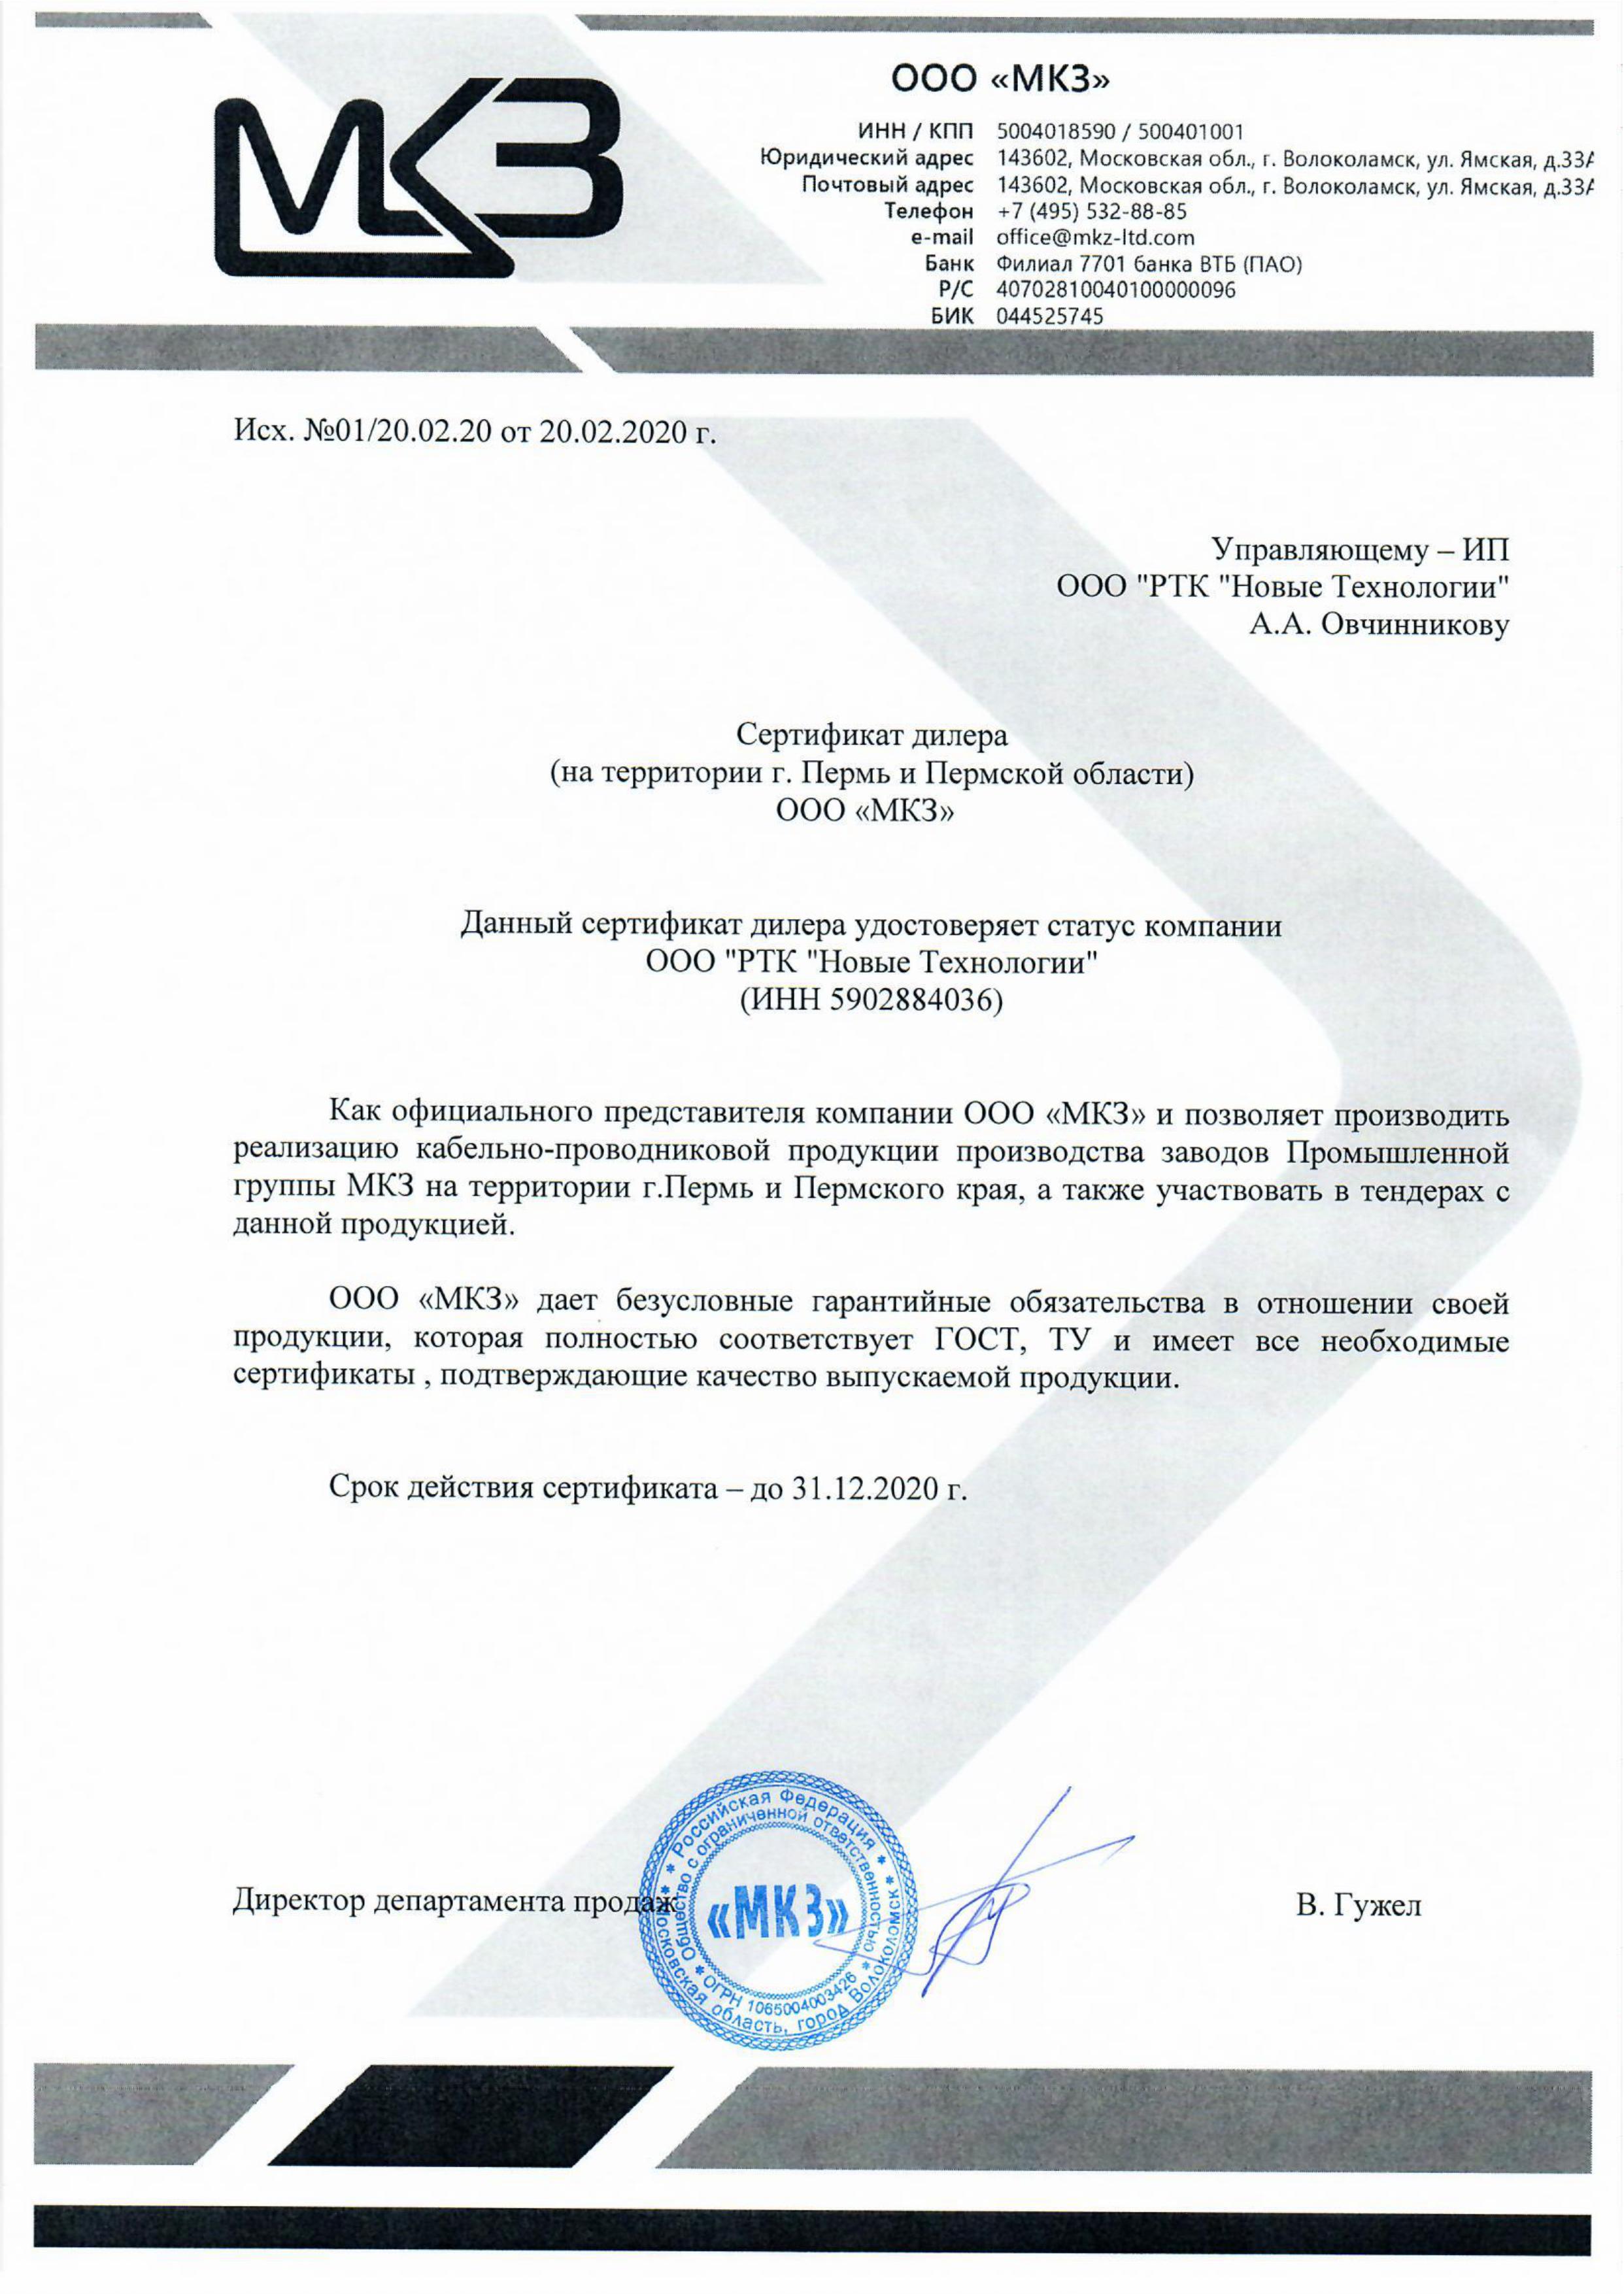 Сертификат ООО «МКЗ»